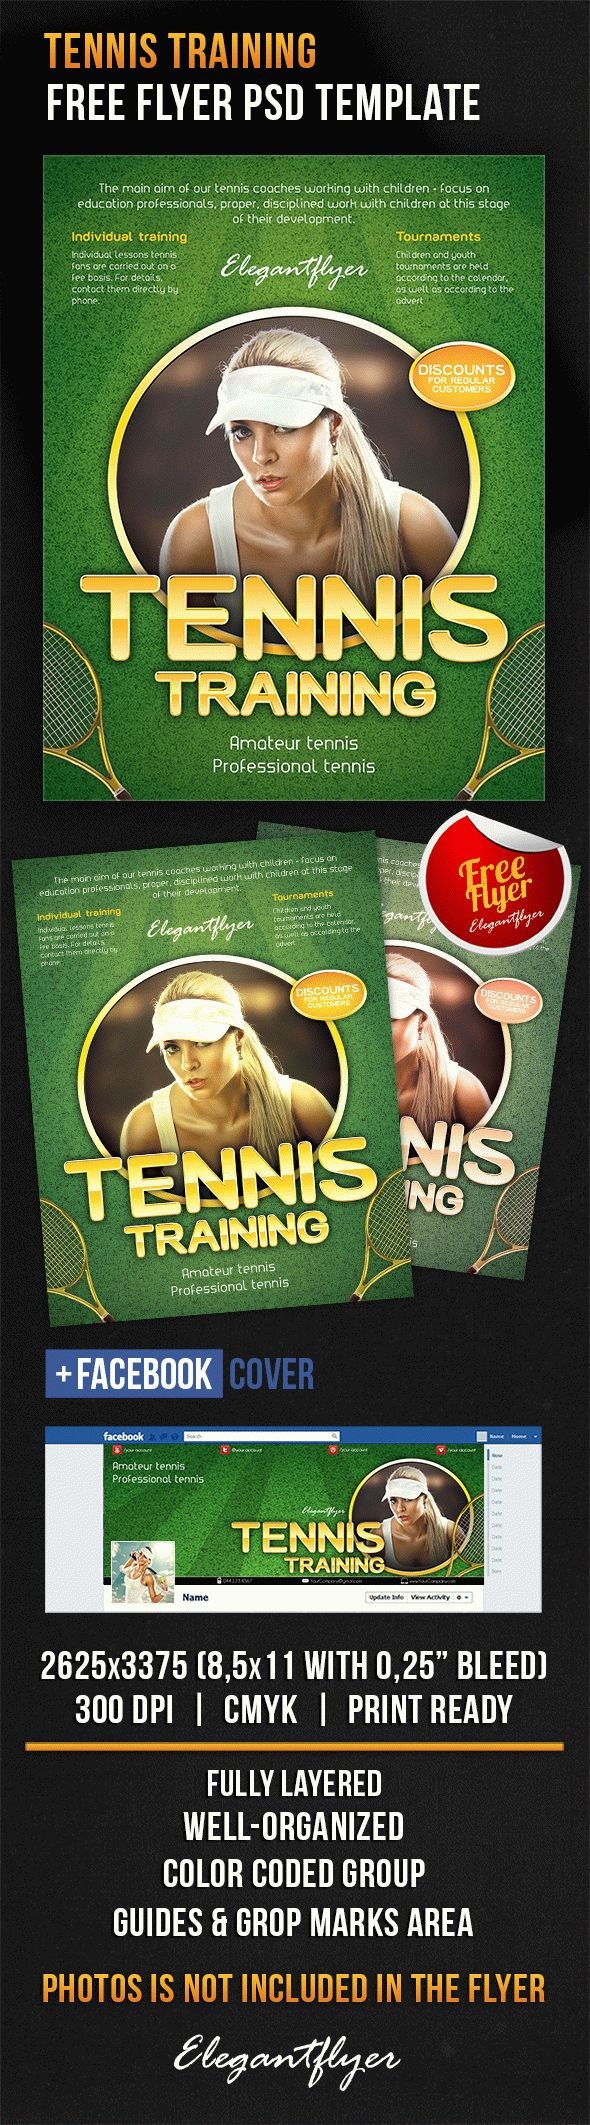 Tennis training by ElegantFlyer